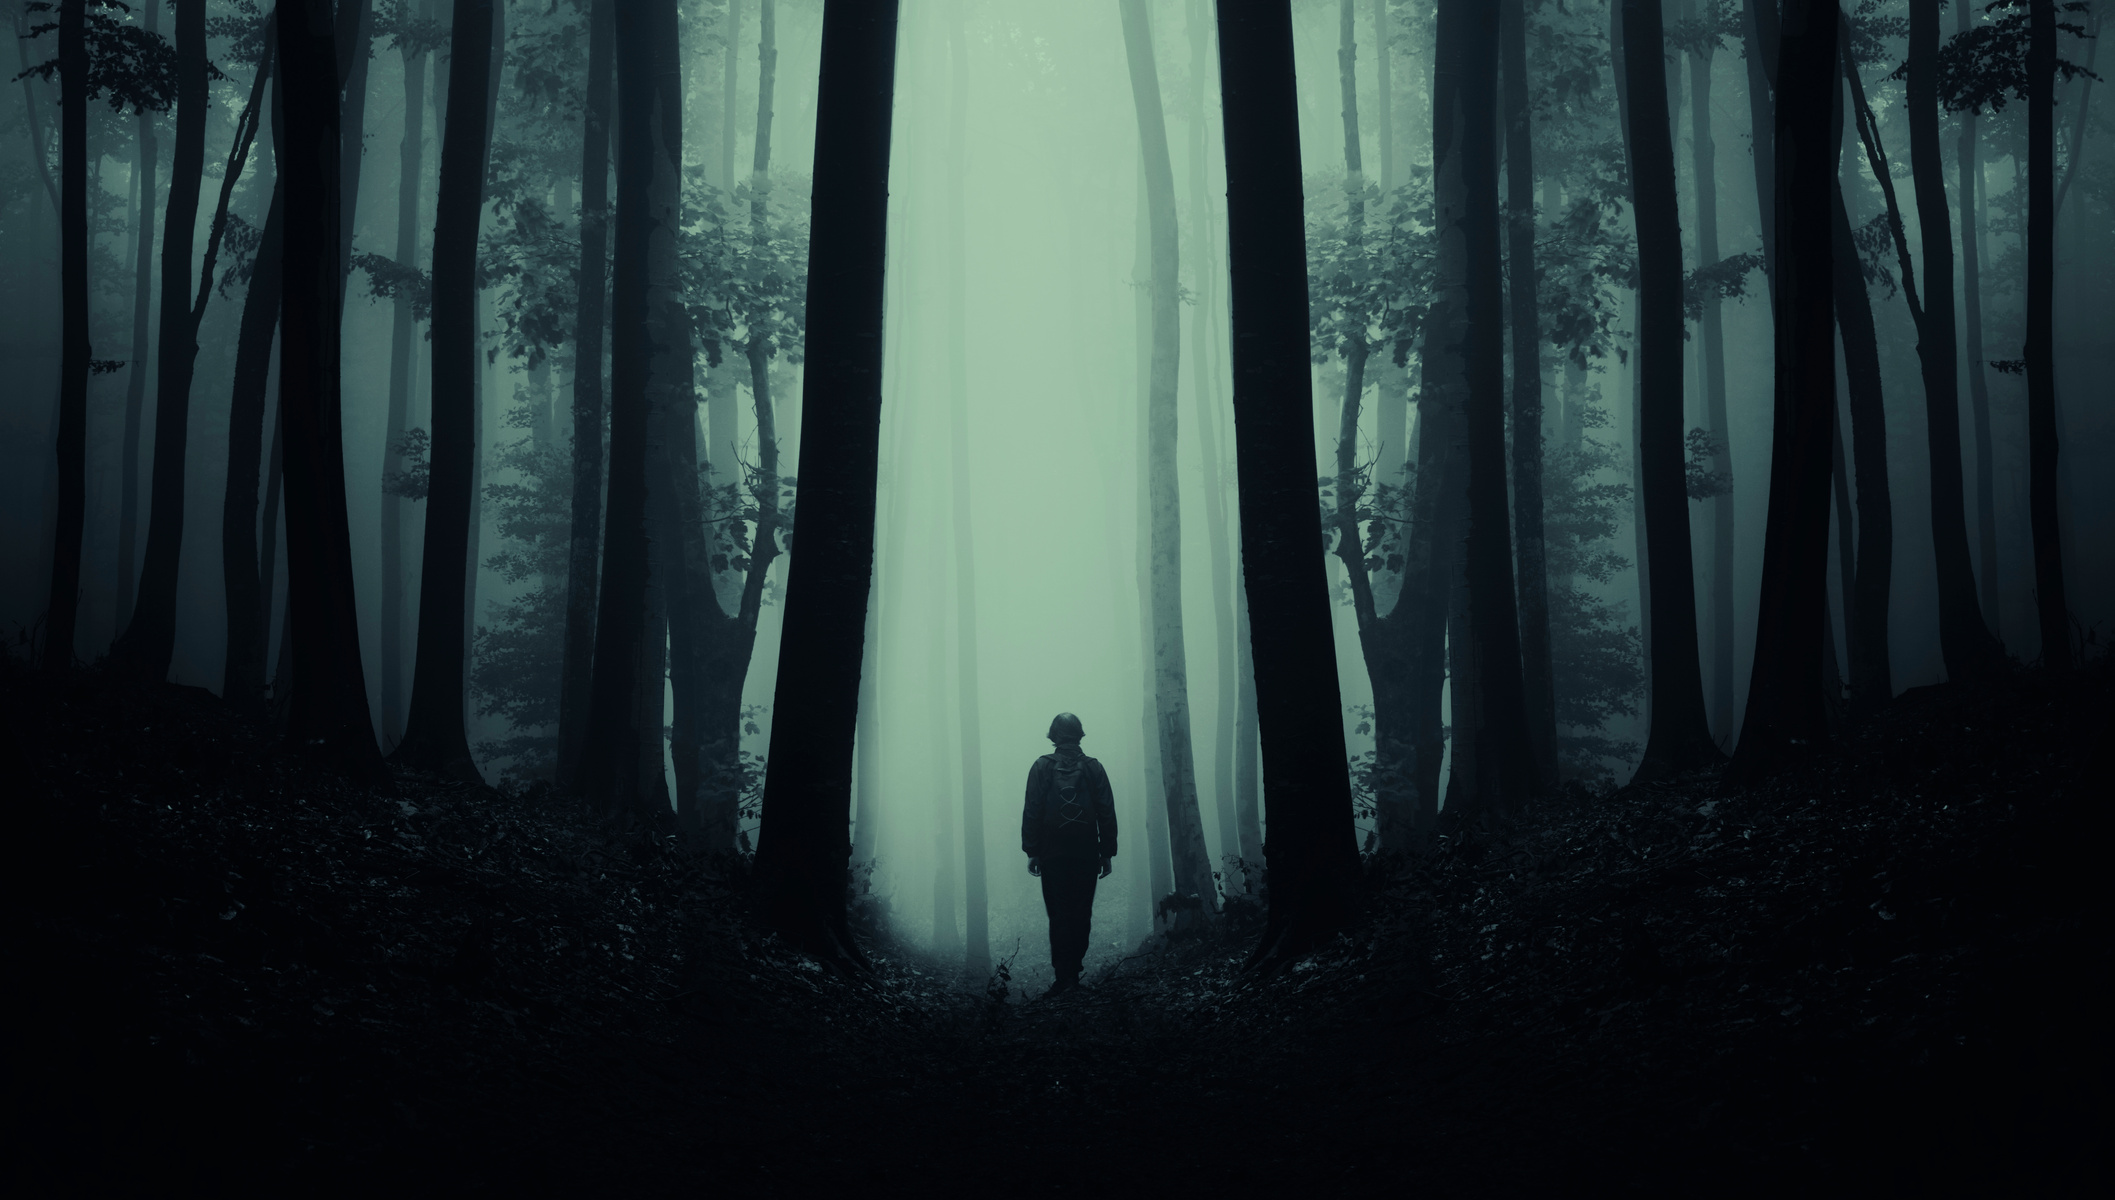 A Lone Man in a Dark Forest